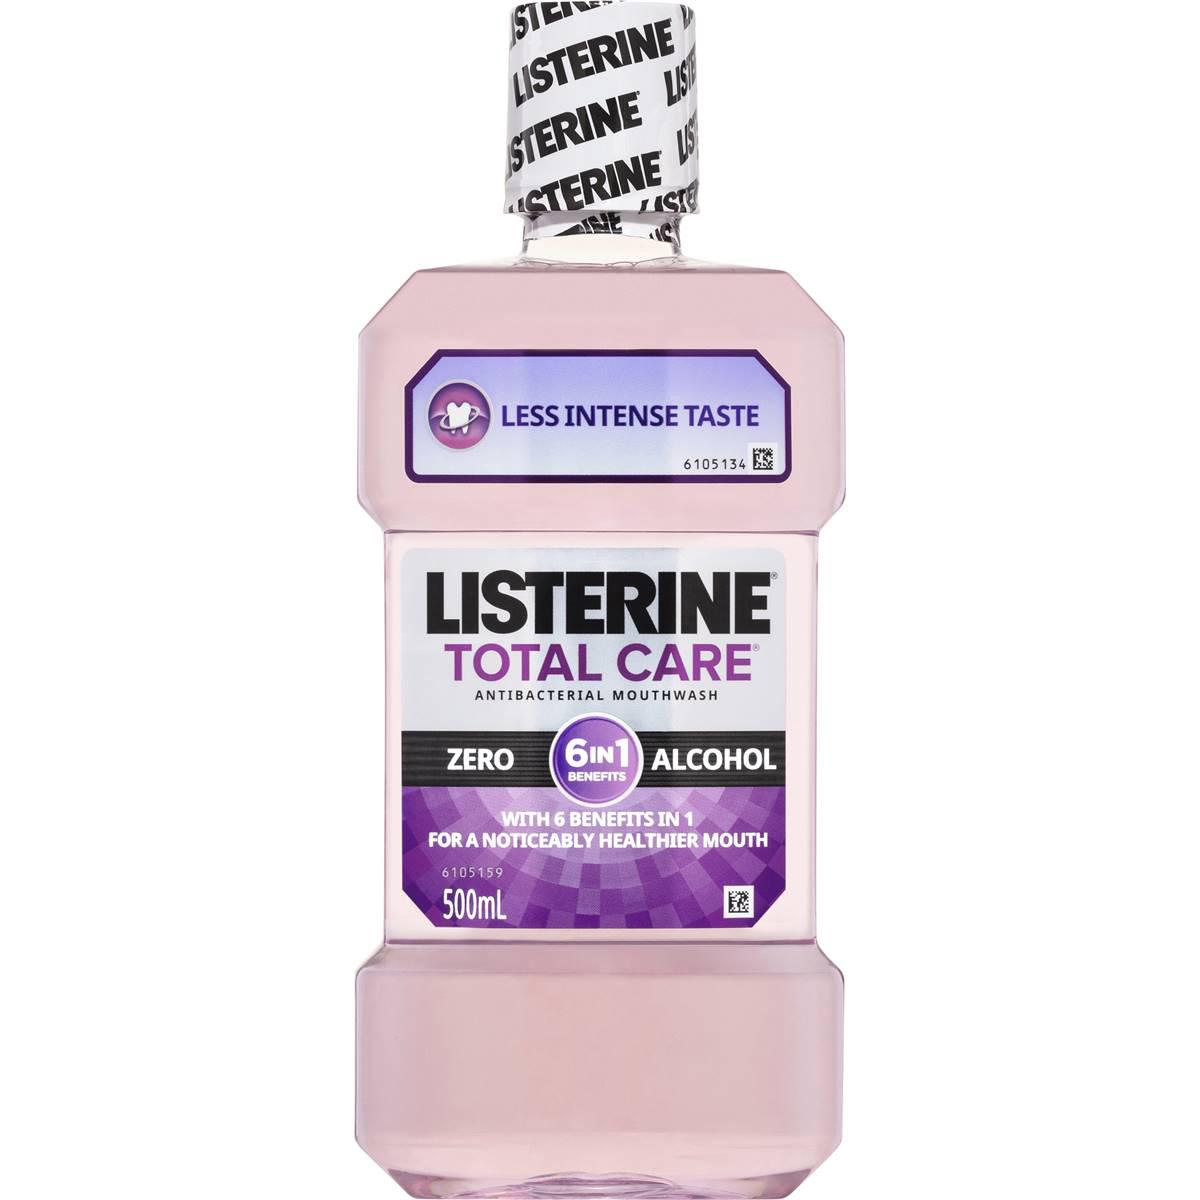 Listerine Total Care Zero Alcohol Antibacterial Mouthwash 500ml